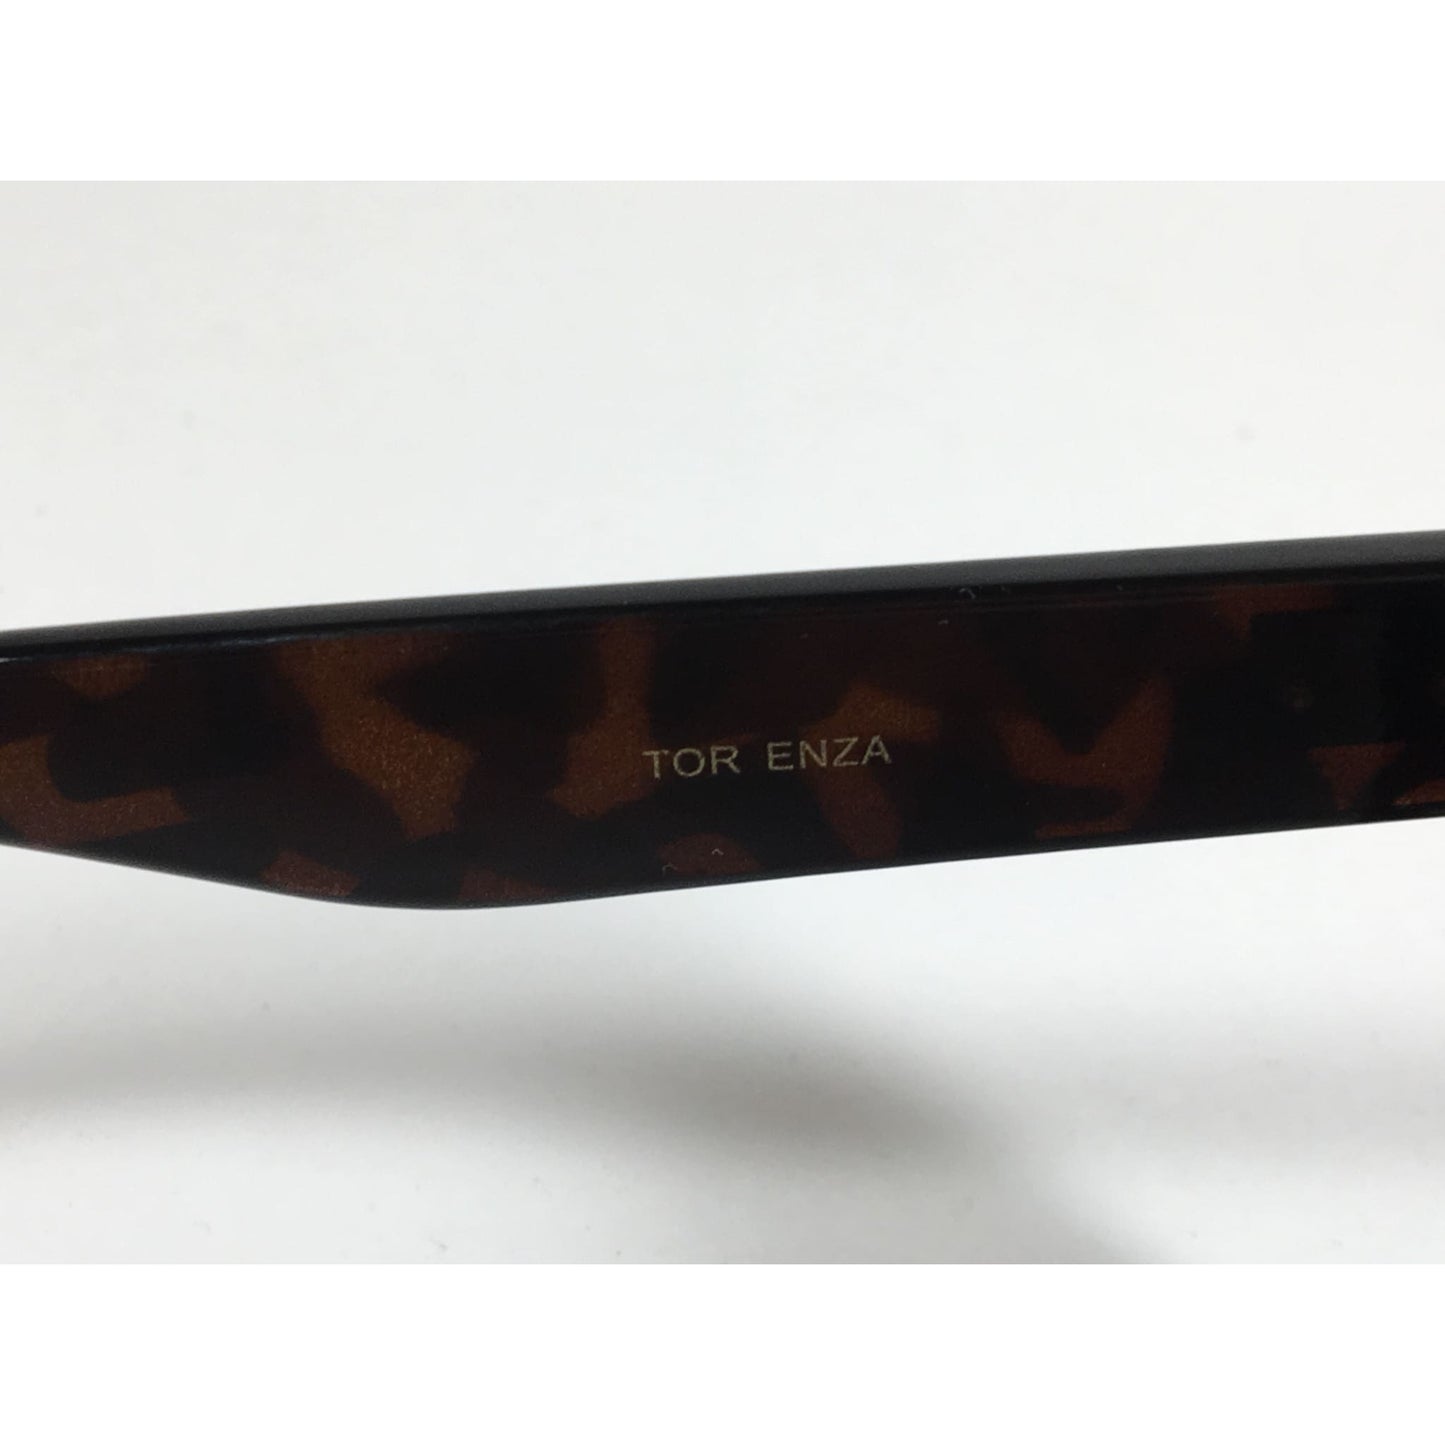 Versace 19V69 Italia Enza Square Sunglasses Brown Tortoise Brown Gradient Lens - Sunglasses